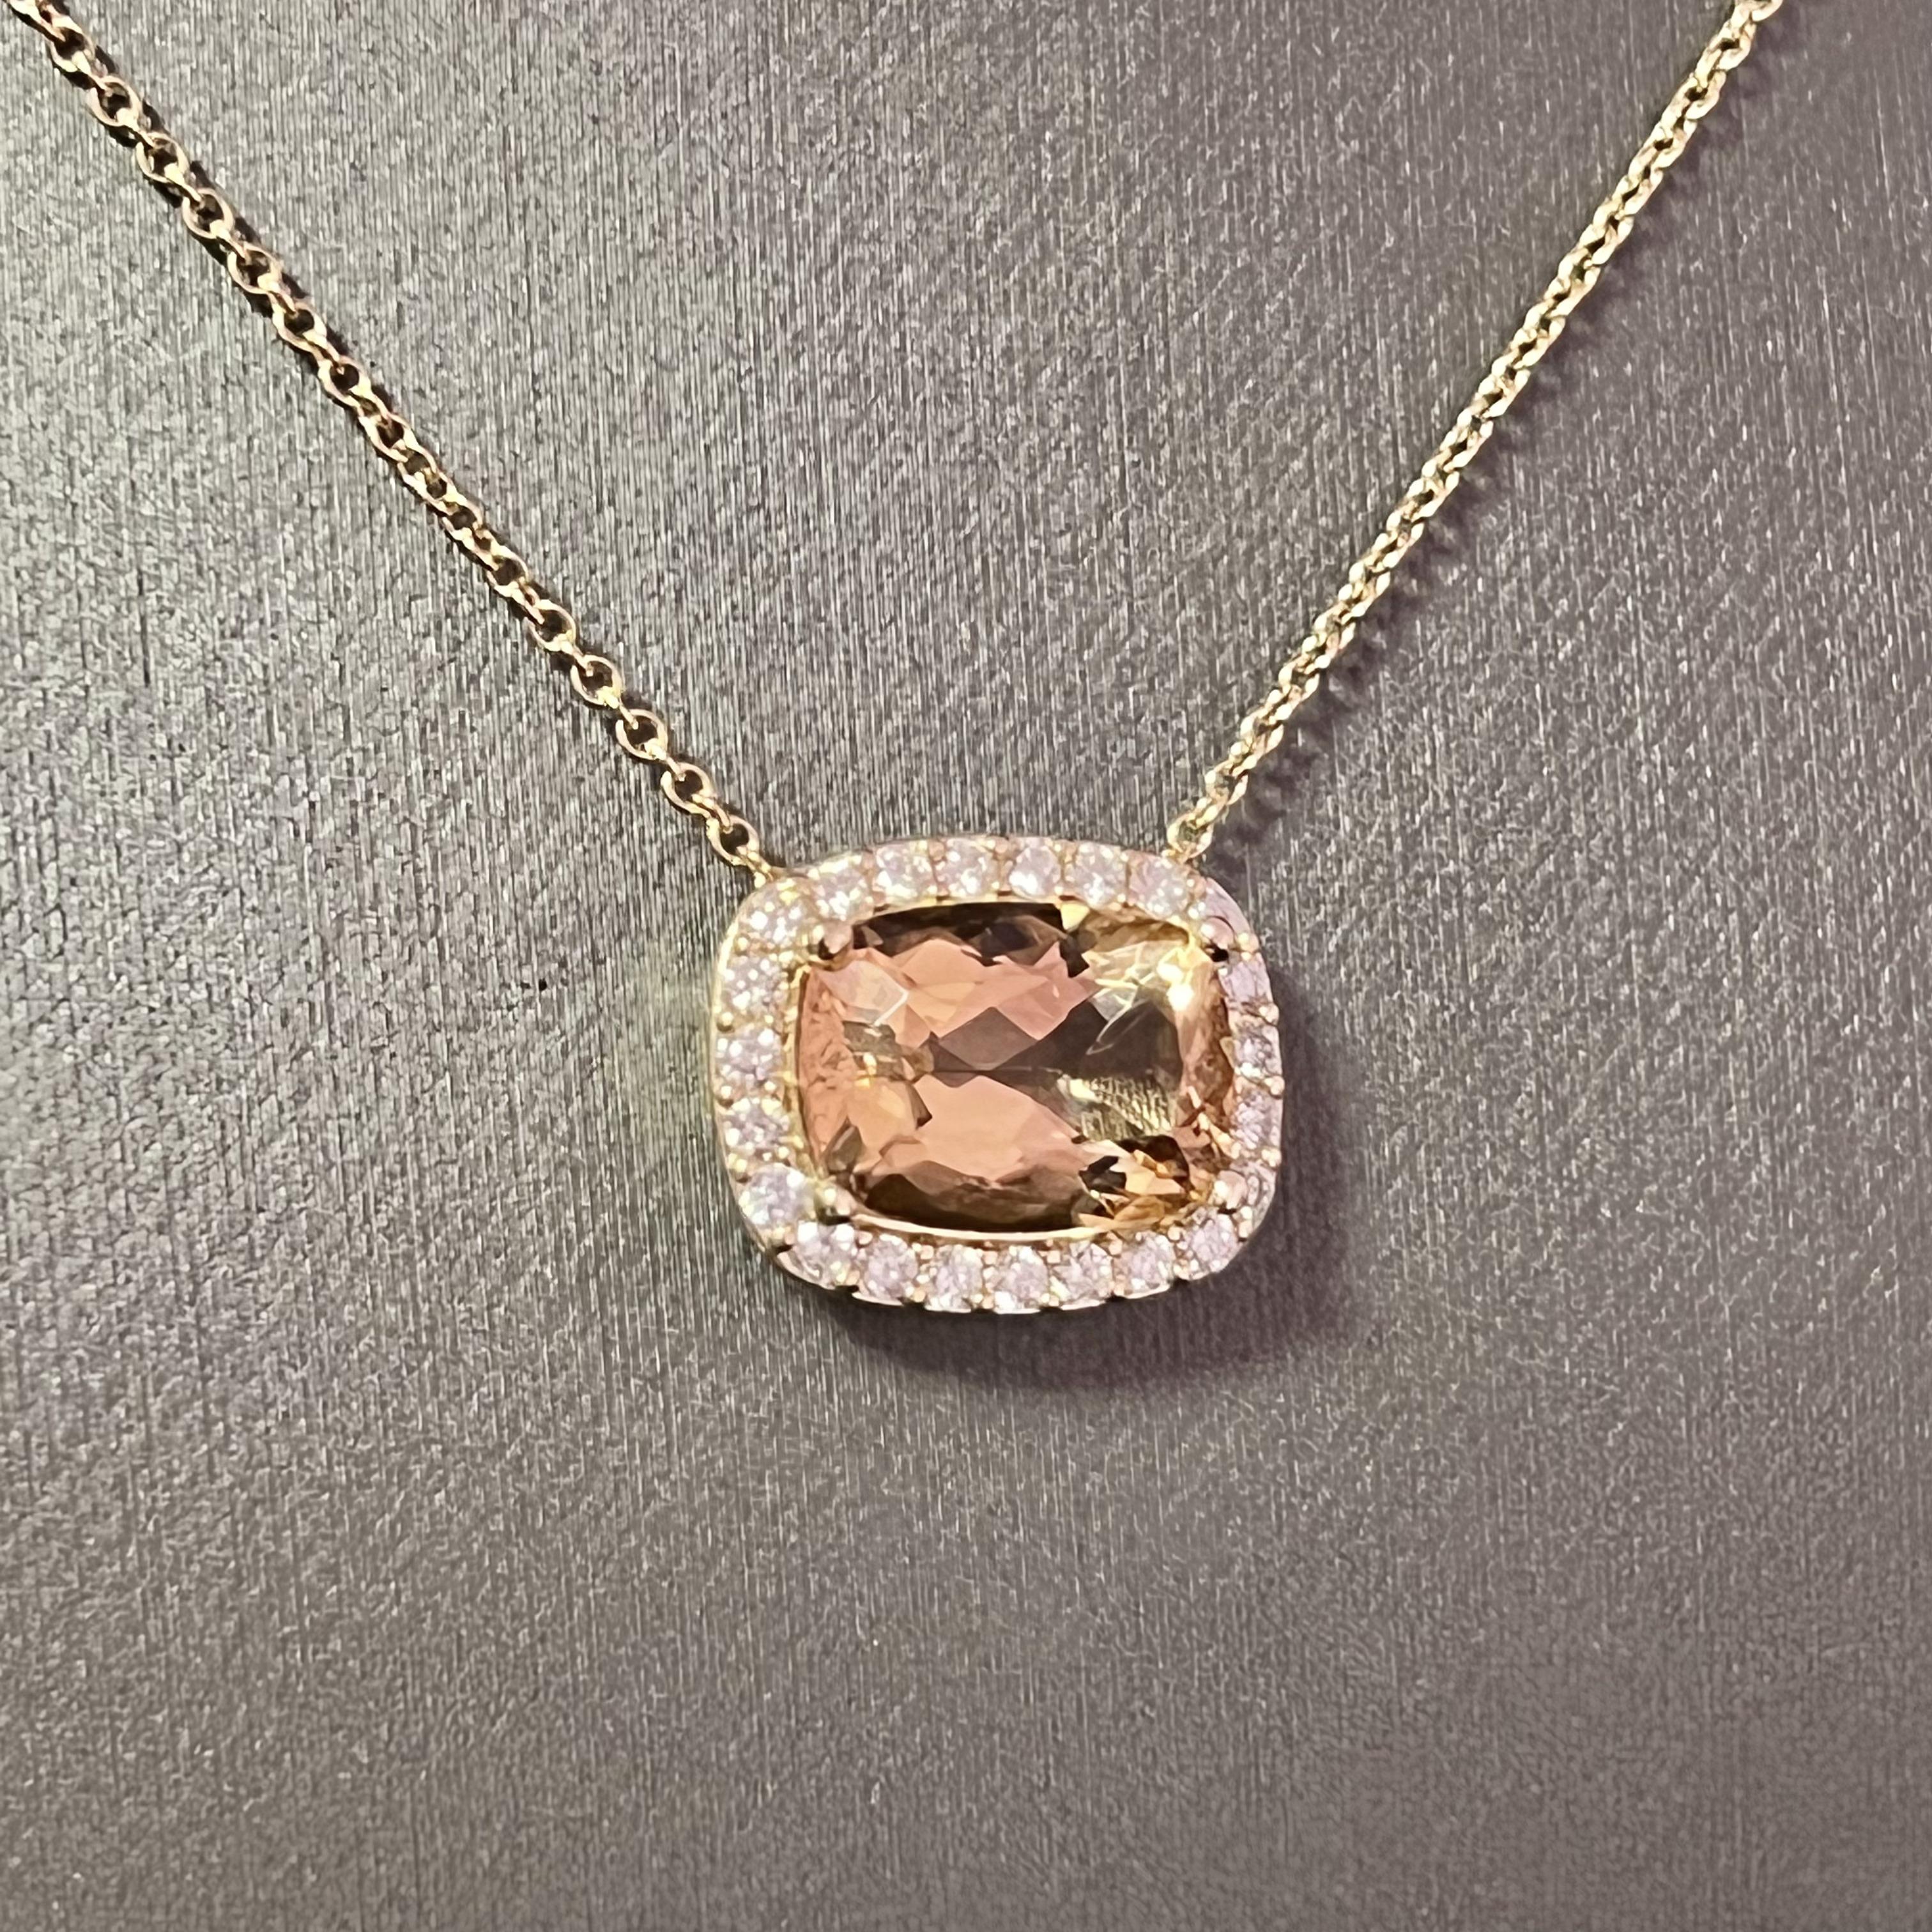 Collier pendentif en or 14 carats avec Morganite et diamants 7,35 carats certifiés TCW, 5 950 $ en vente 1